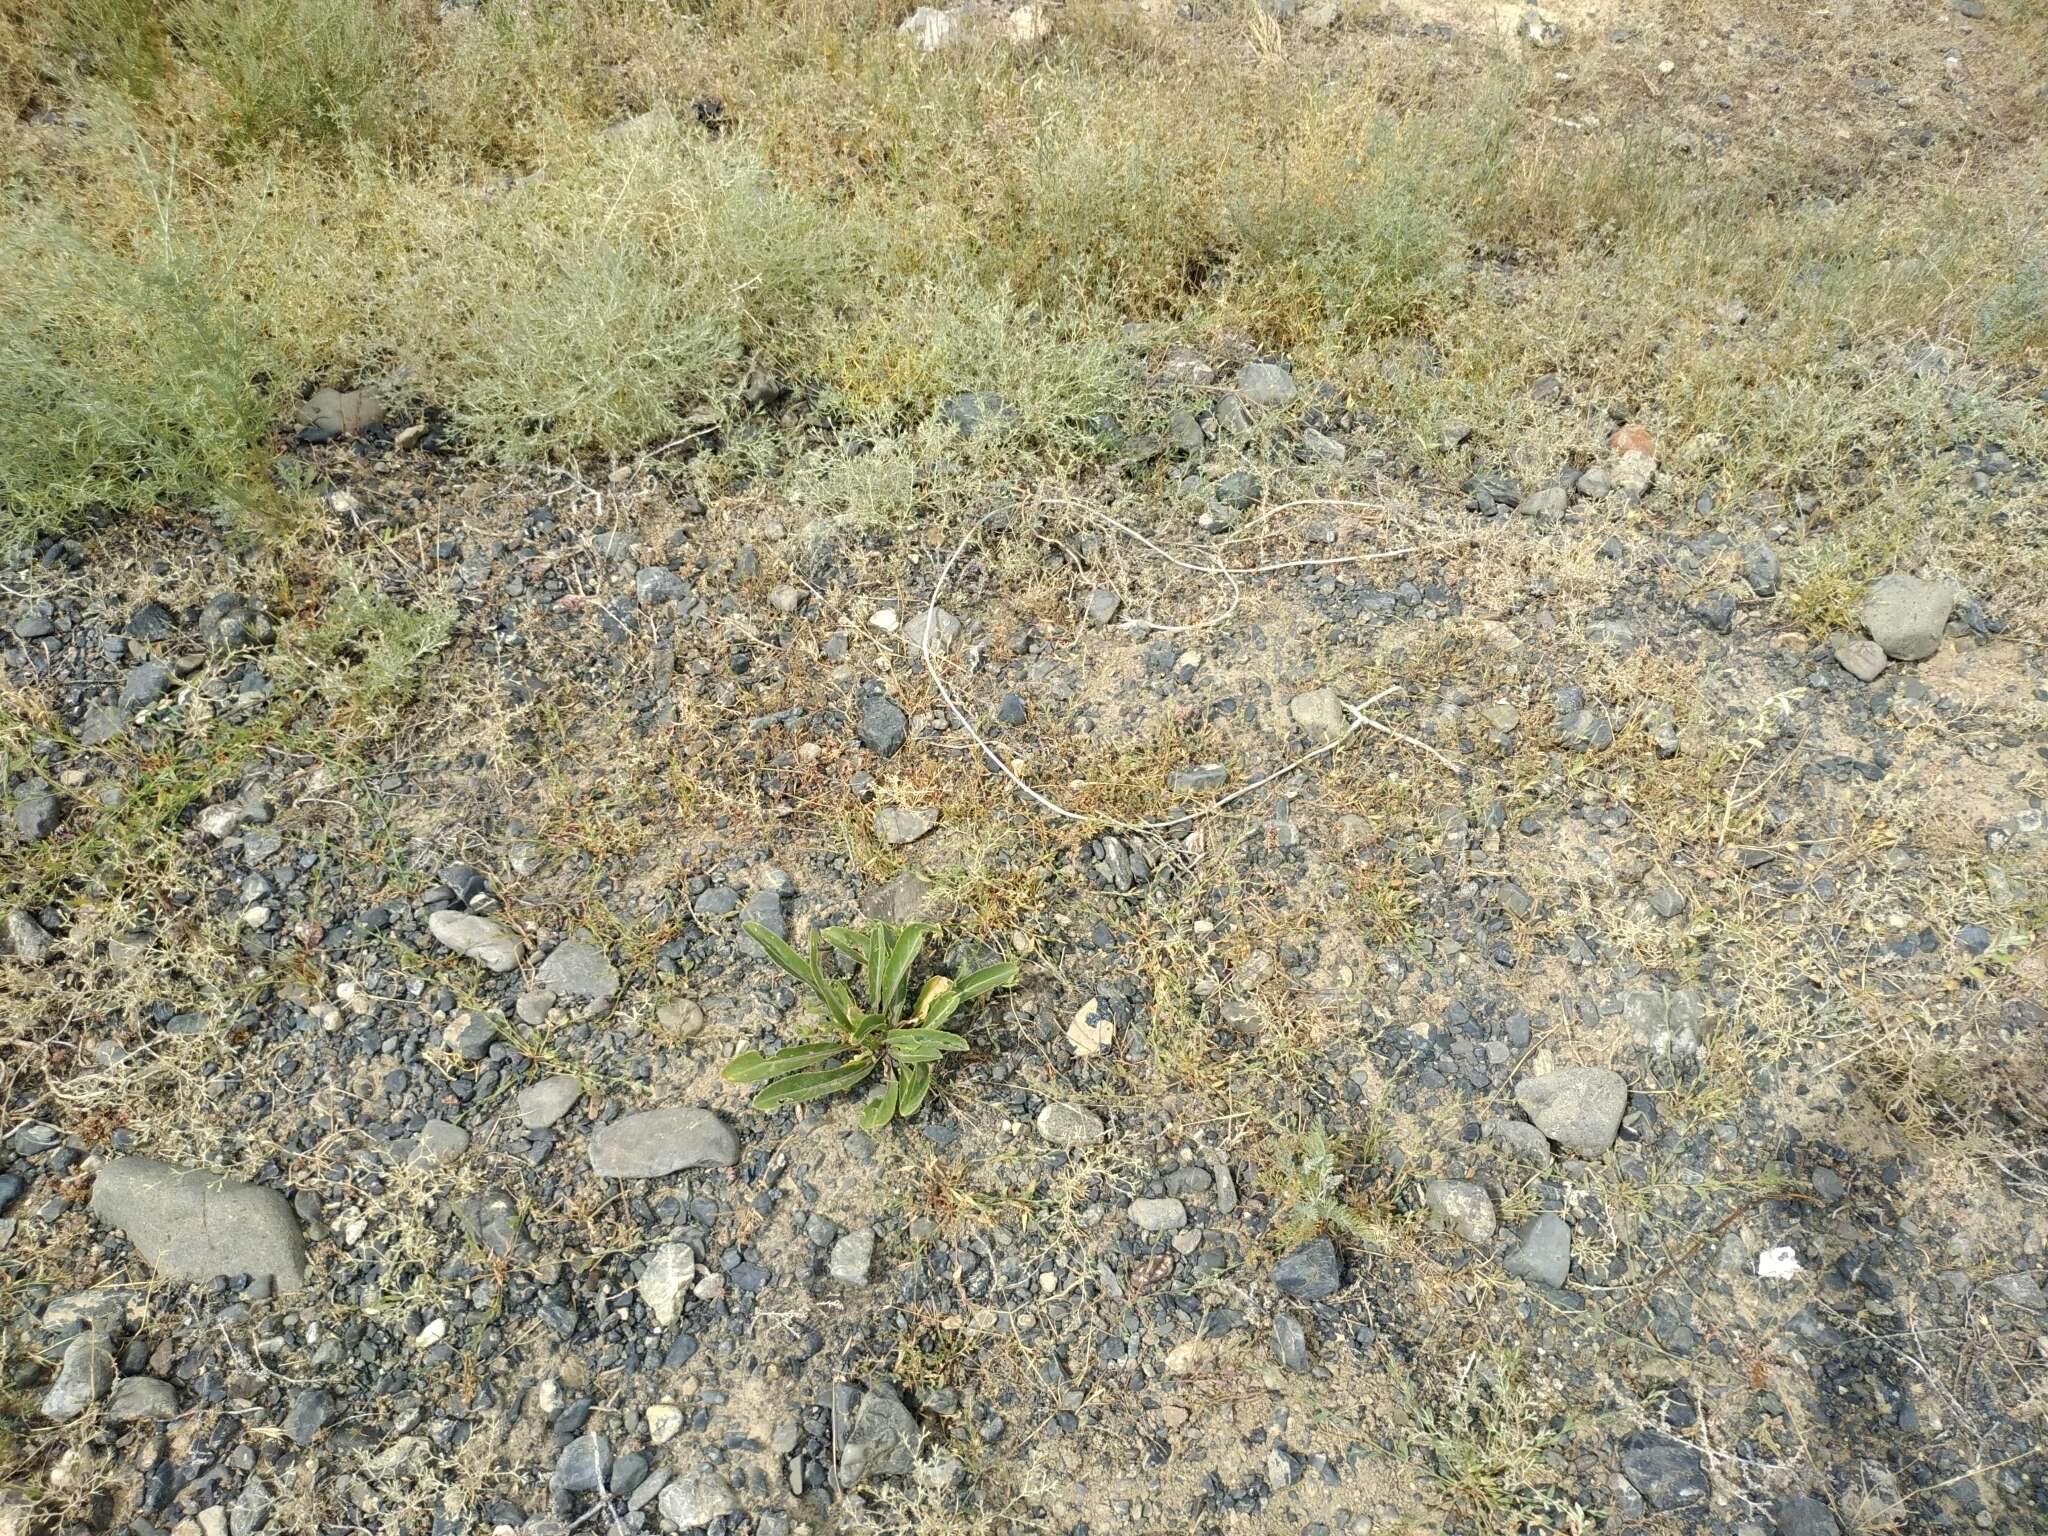 Image of Brassica elongata subsp. integrifolia (Boiss.) Breistr.